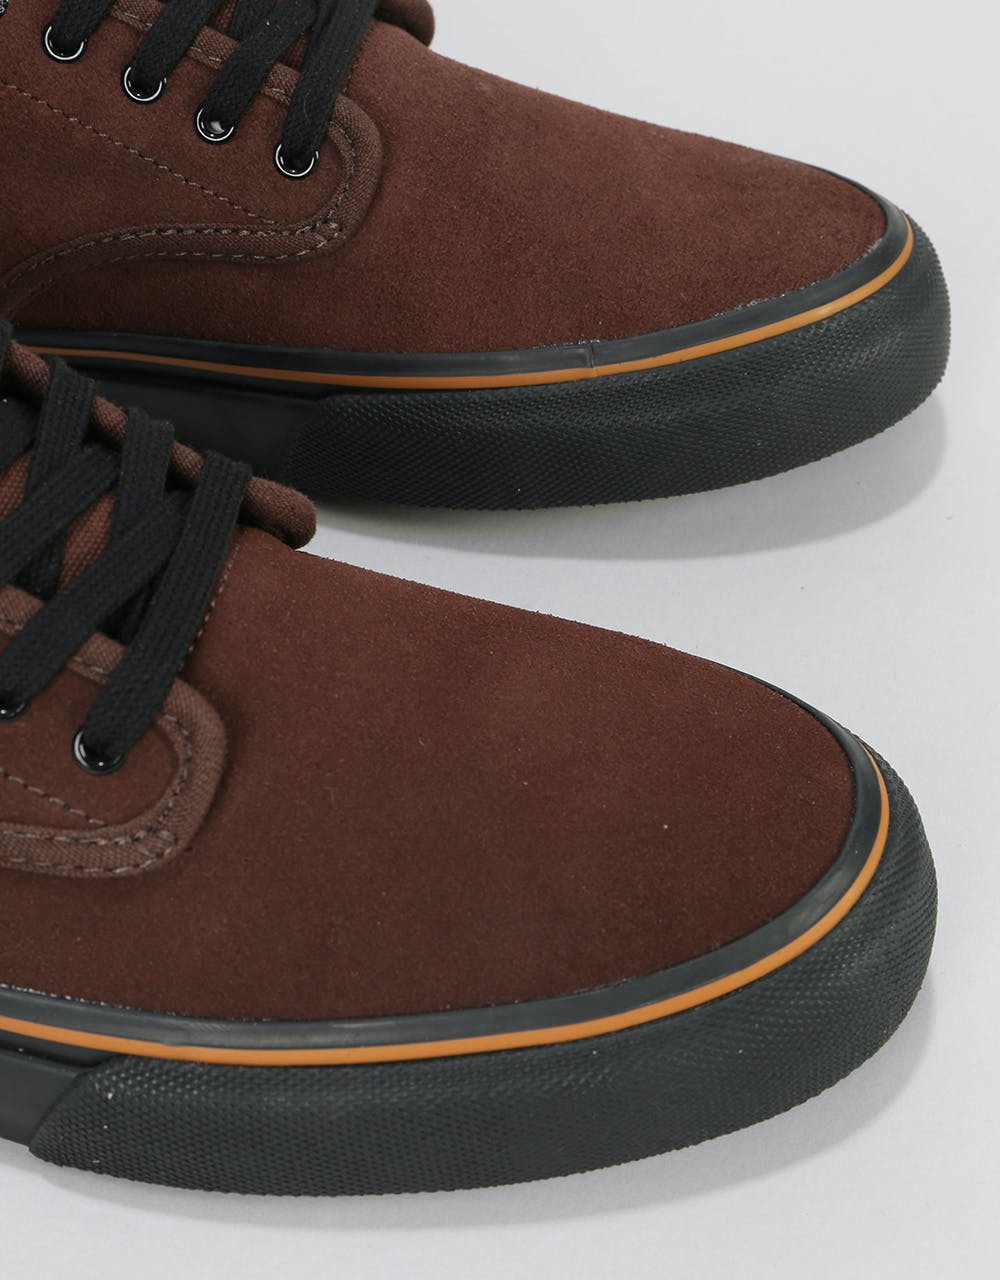 Emerica Wino G6 Skate Shoes - Brown/Black/Tan